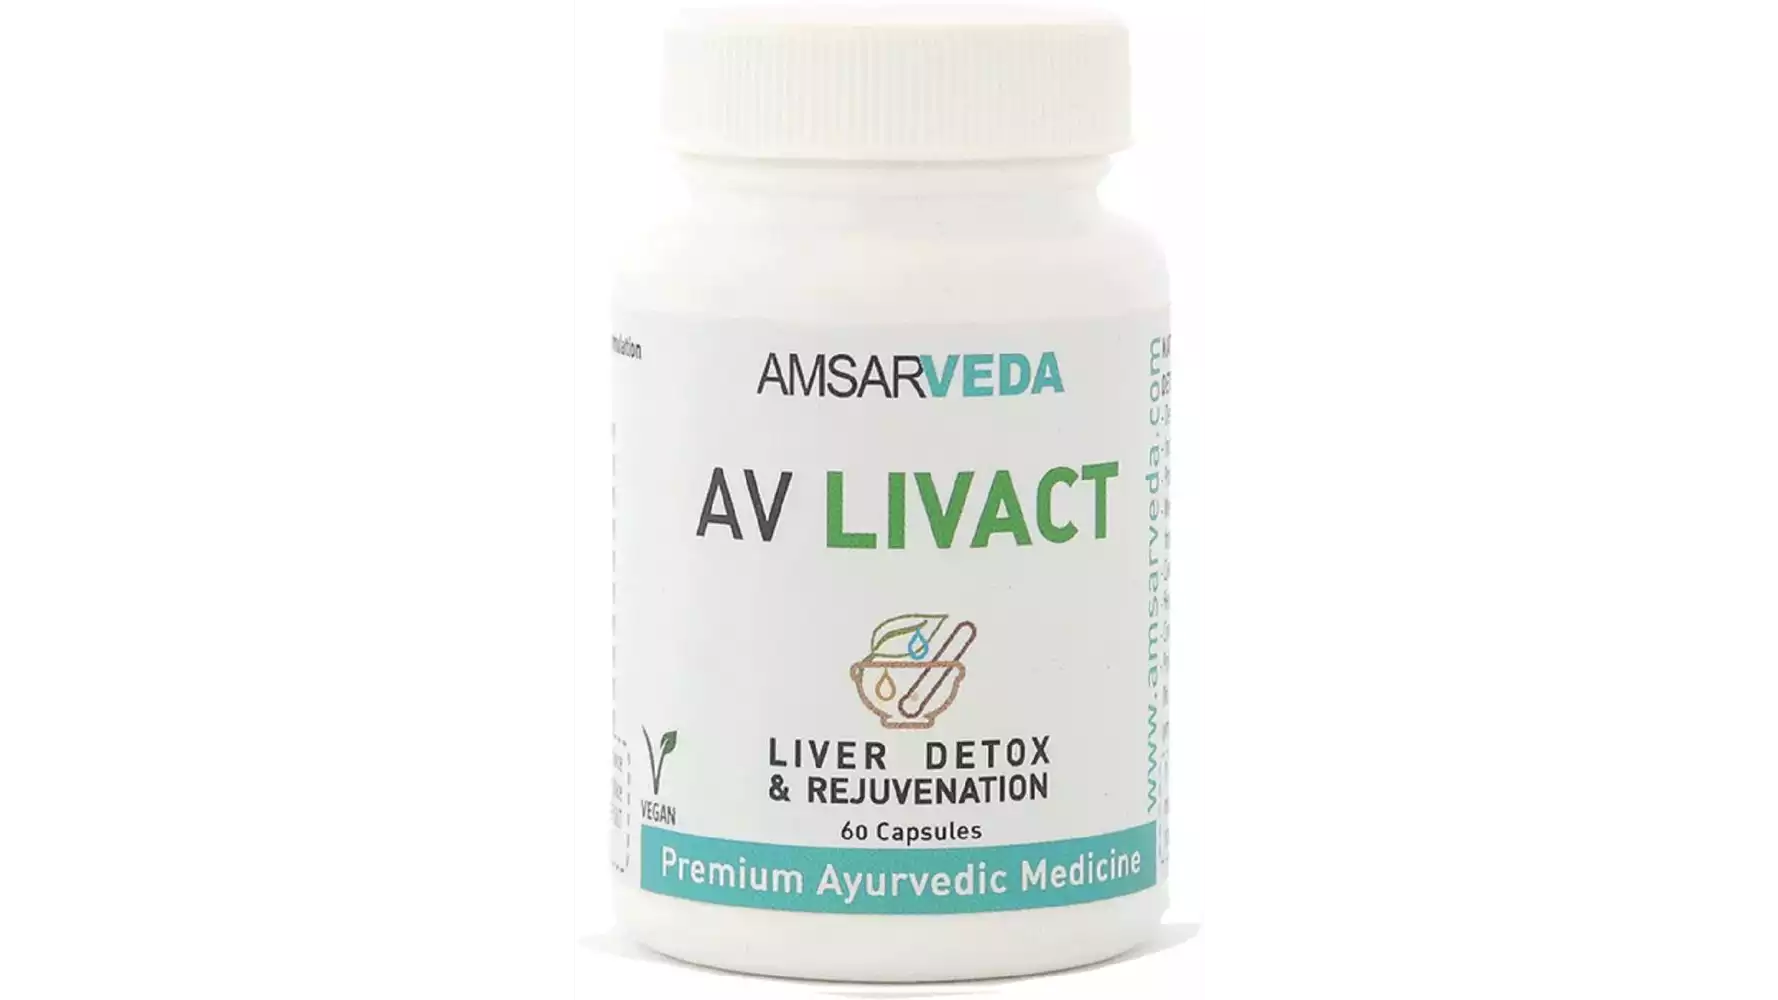 Amsarveda AV Livact - Liver Detox & Rejuvenation (60caps)